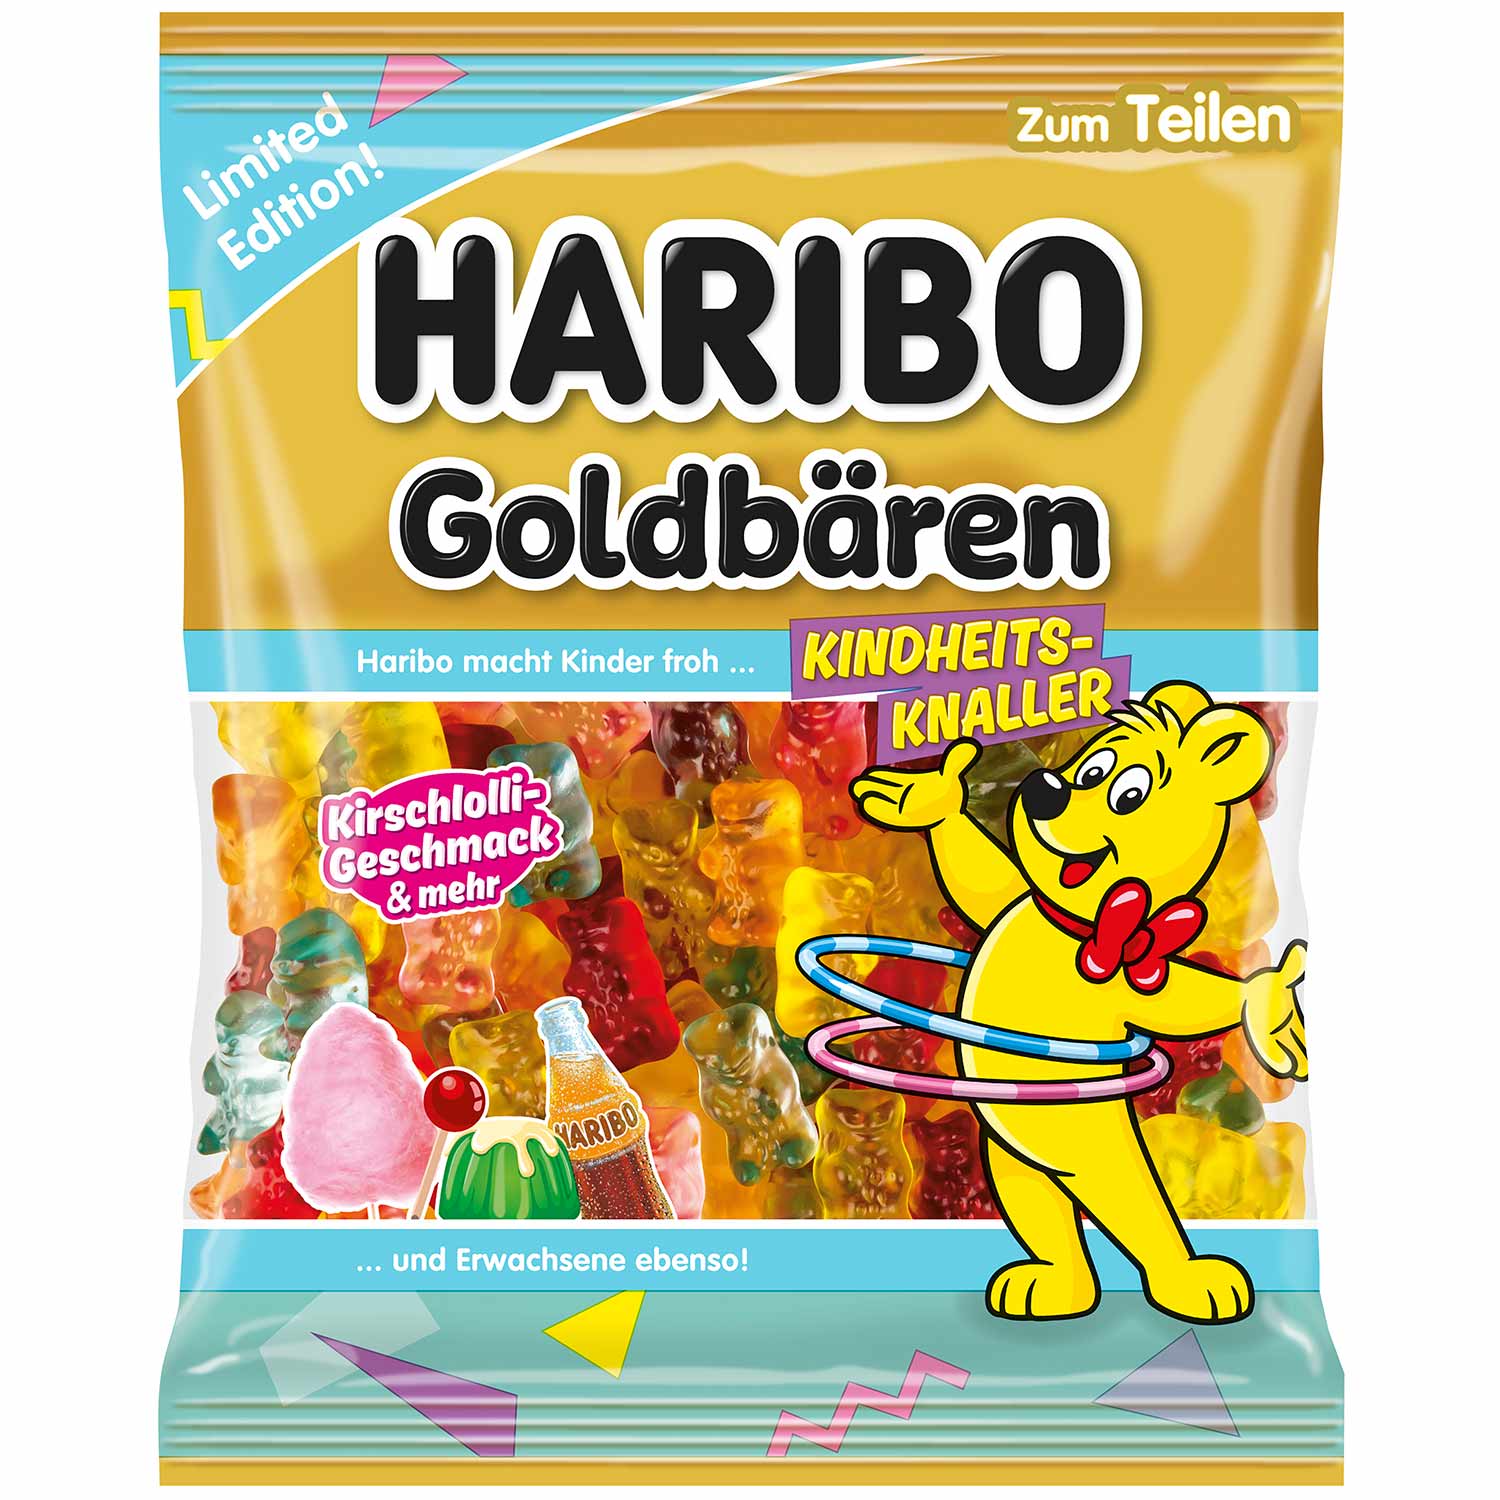 Haribo Goldbaeren Kindheitsknaller 175g (Germany)